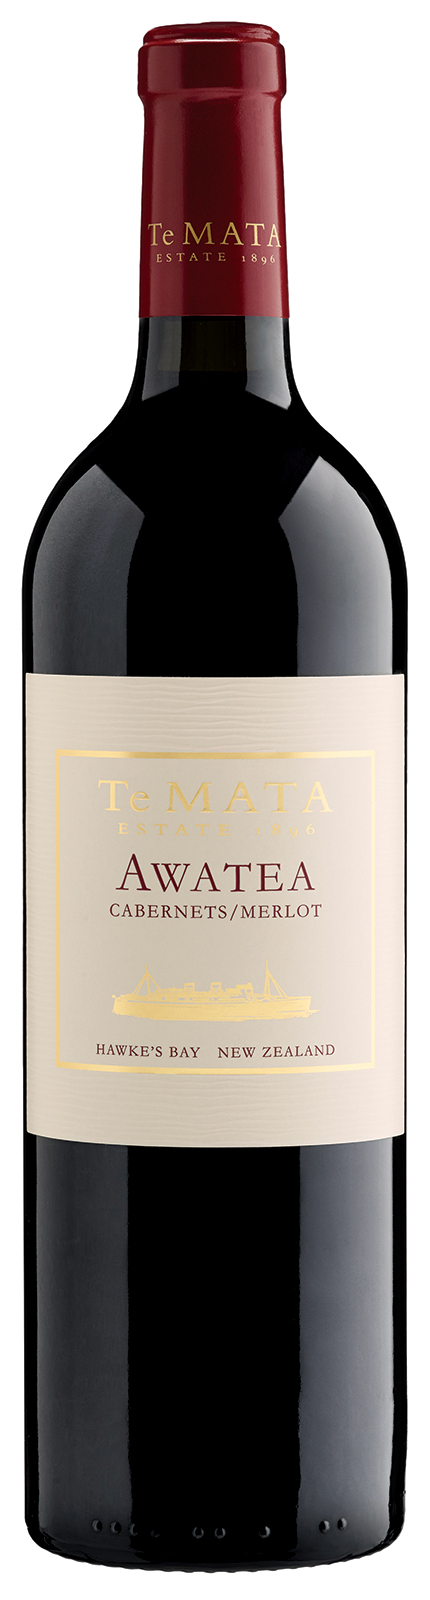 Awatea Cabernets / Merlot '19